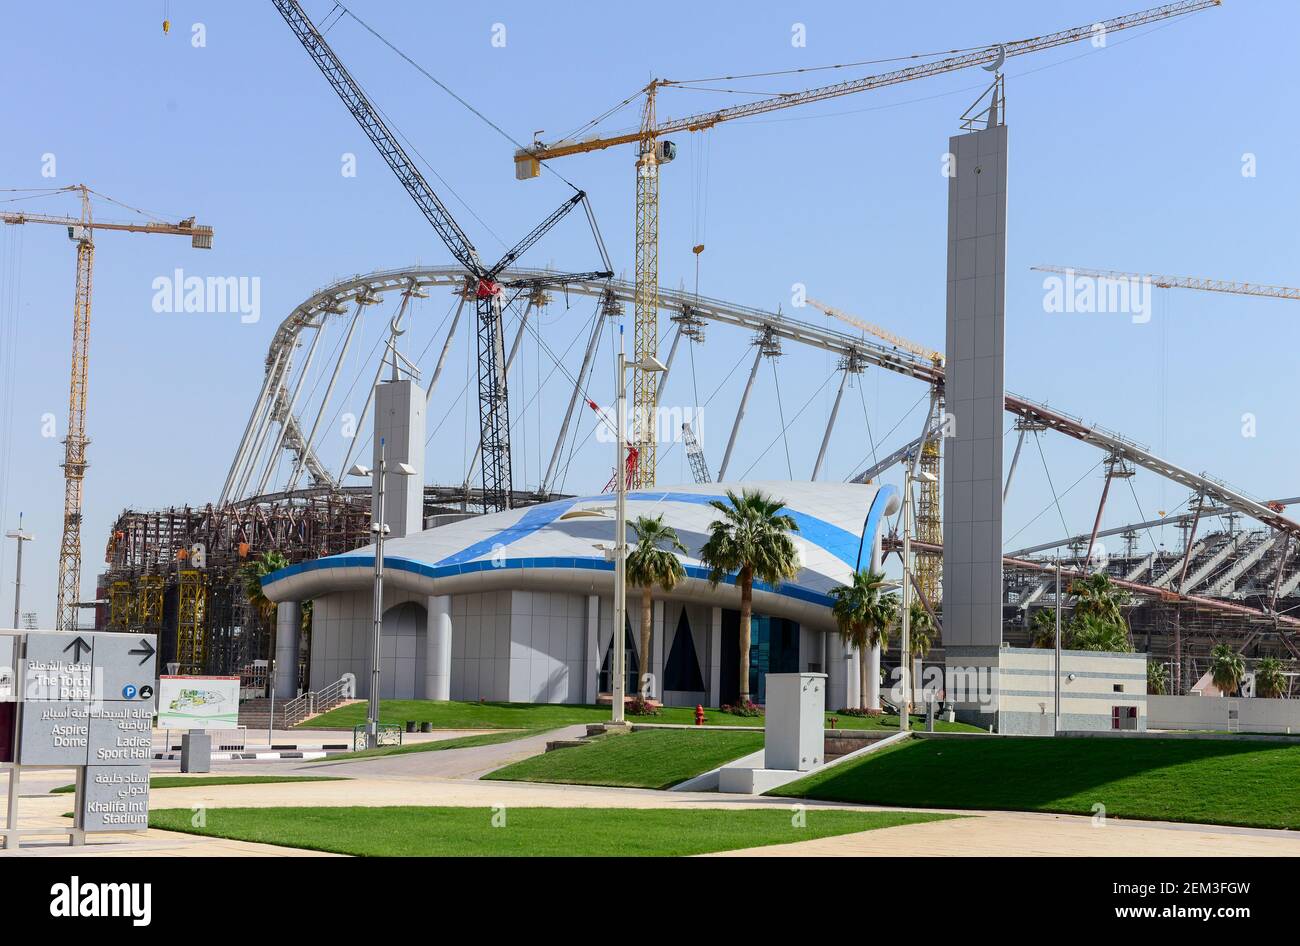 QATAR, Doha, cantiere Khalifa International Stadium per la Coppa del mondo FIFA 2022, costruito da contract midmac e sixt / KATAR, Doha, Baustelle Khalifa International Stadium fuer die FIFA Fussballweltmeisterschaft 2022, auf den Baustellen arbeiten Gastarbeiter aus verschiedenen Ländern Foto Stock